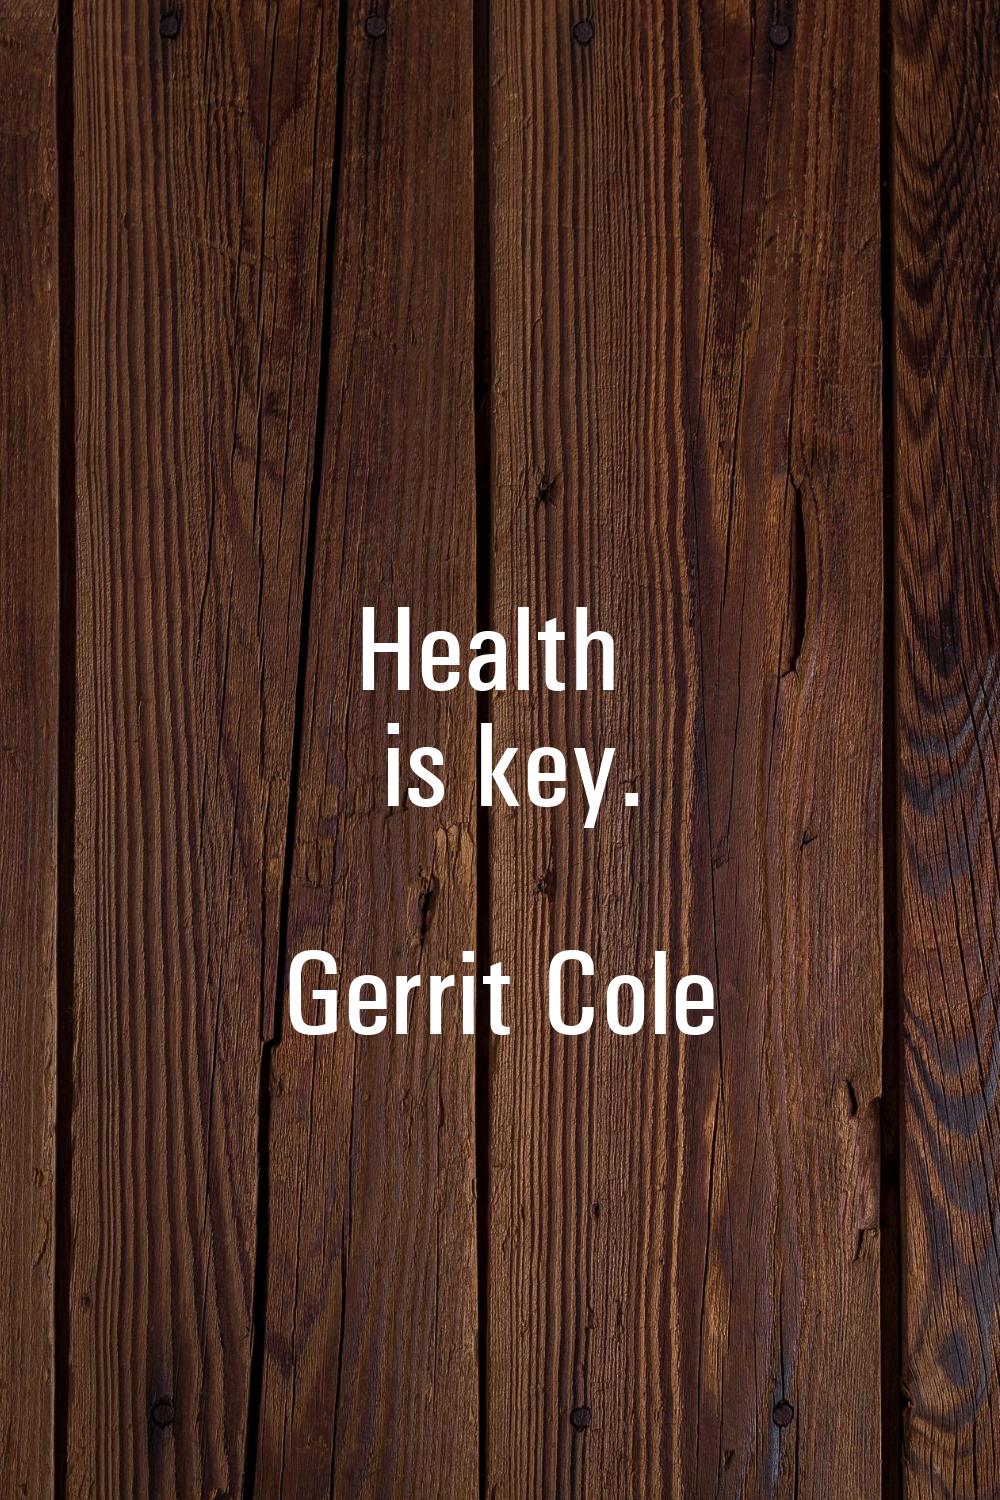 Health is key.